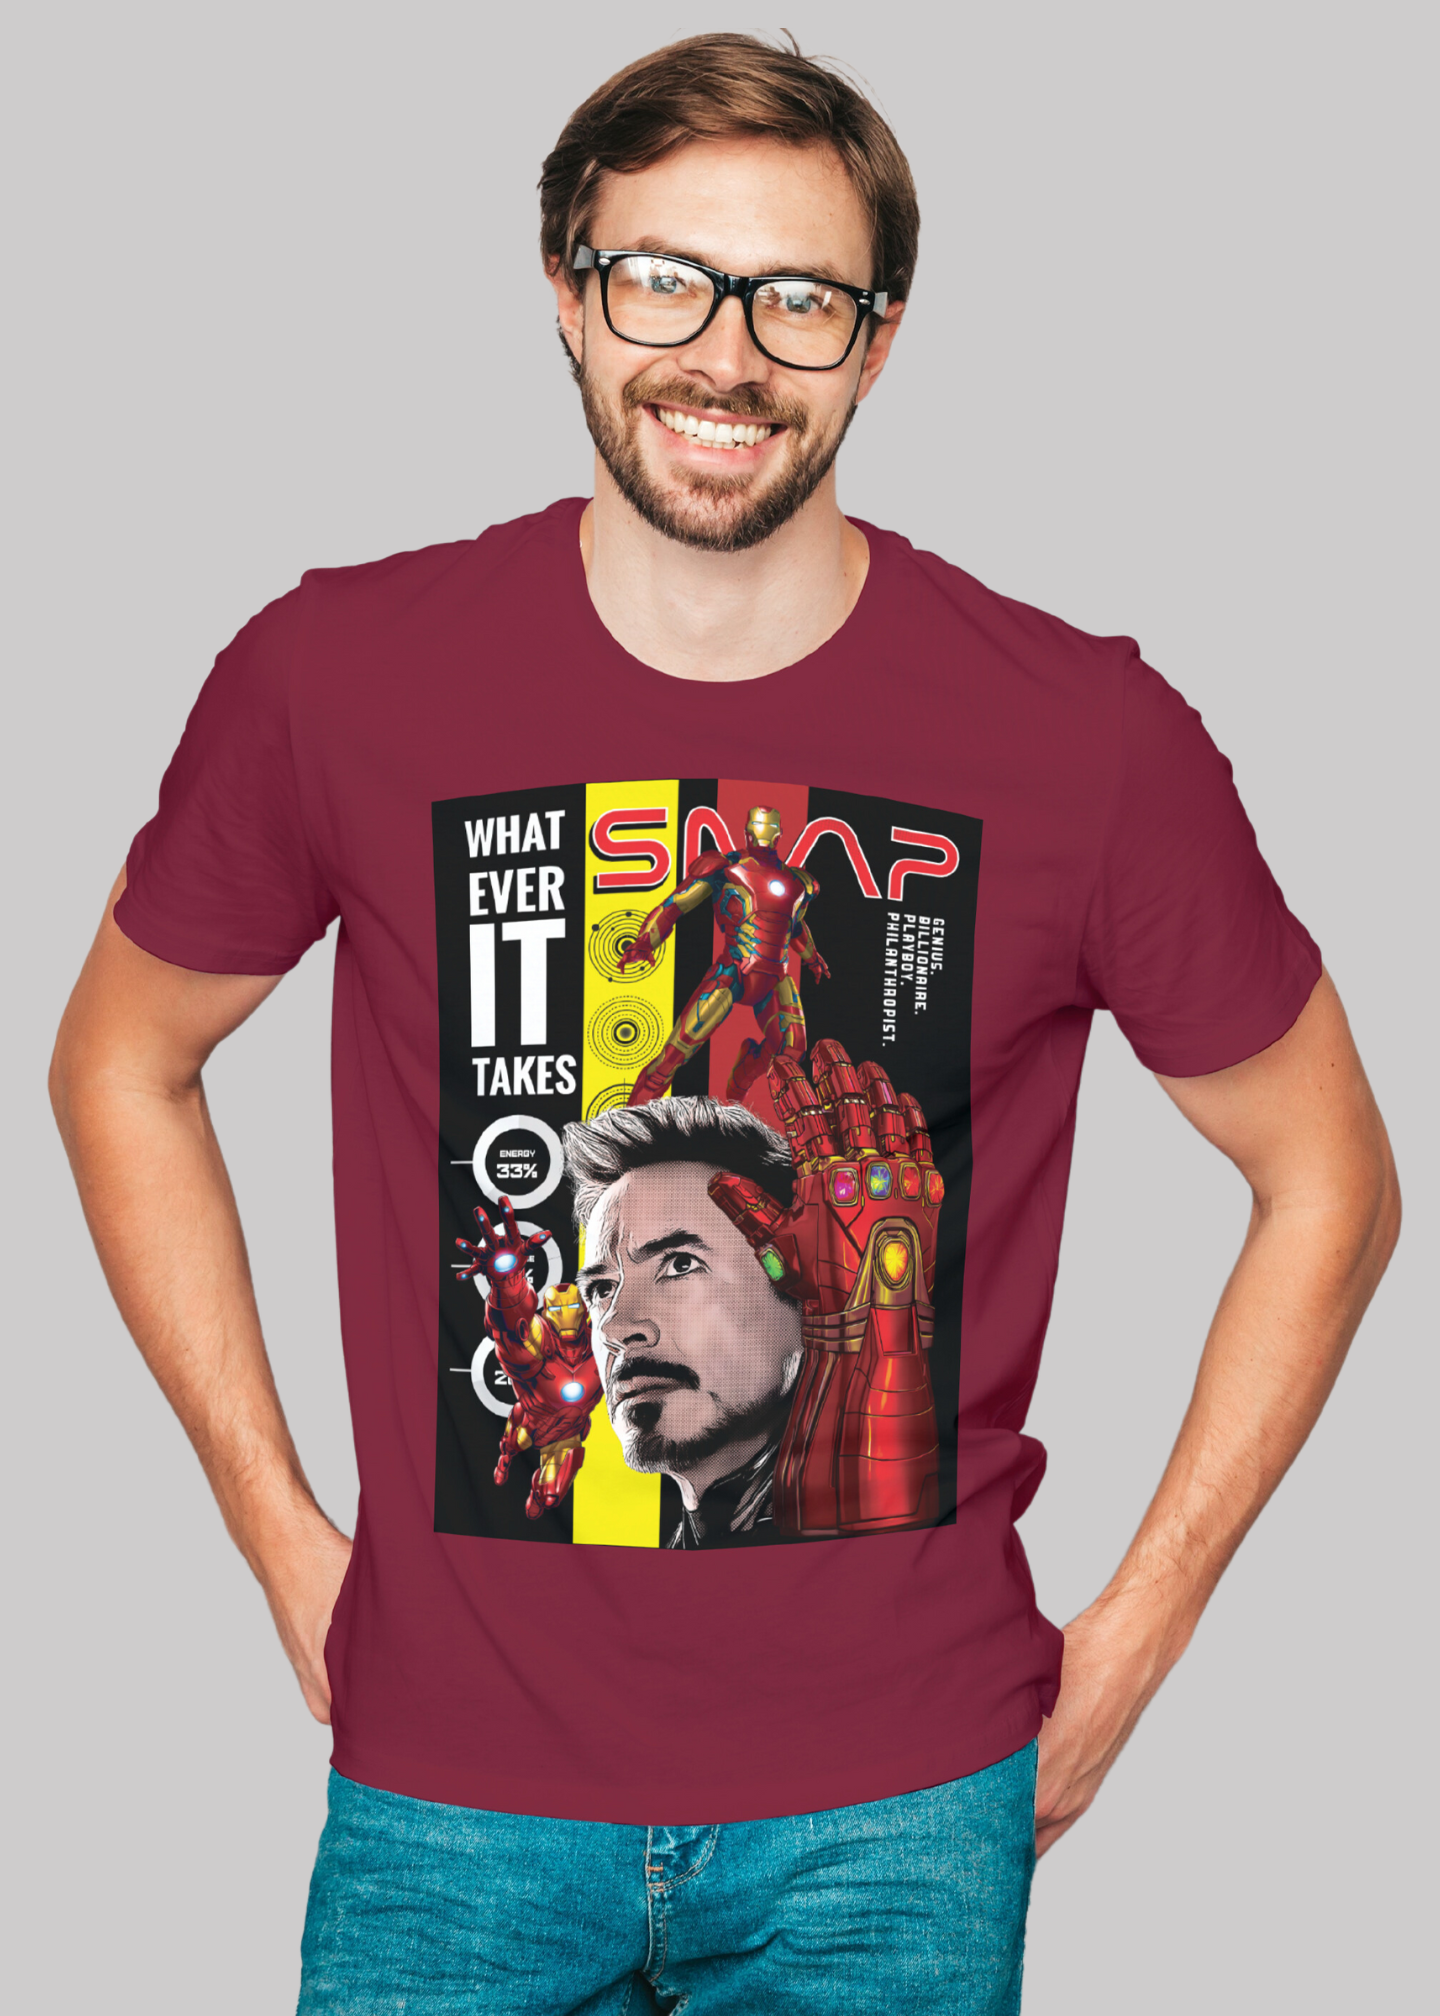 Iron man Printed Half Sleeve Premium Cotton T-shirt For Men